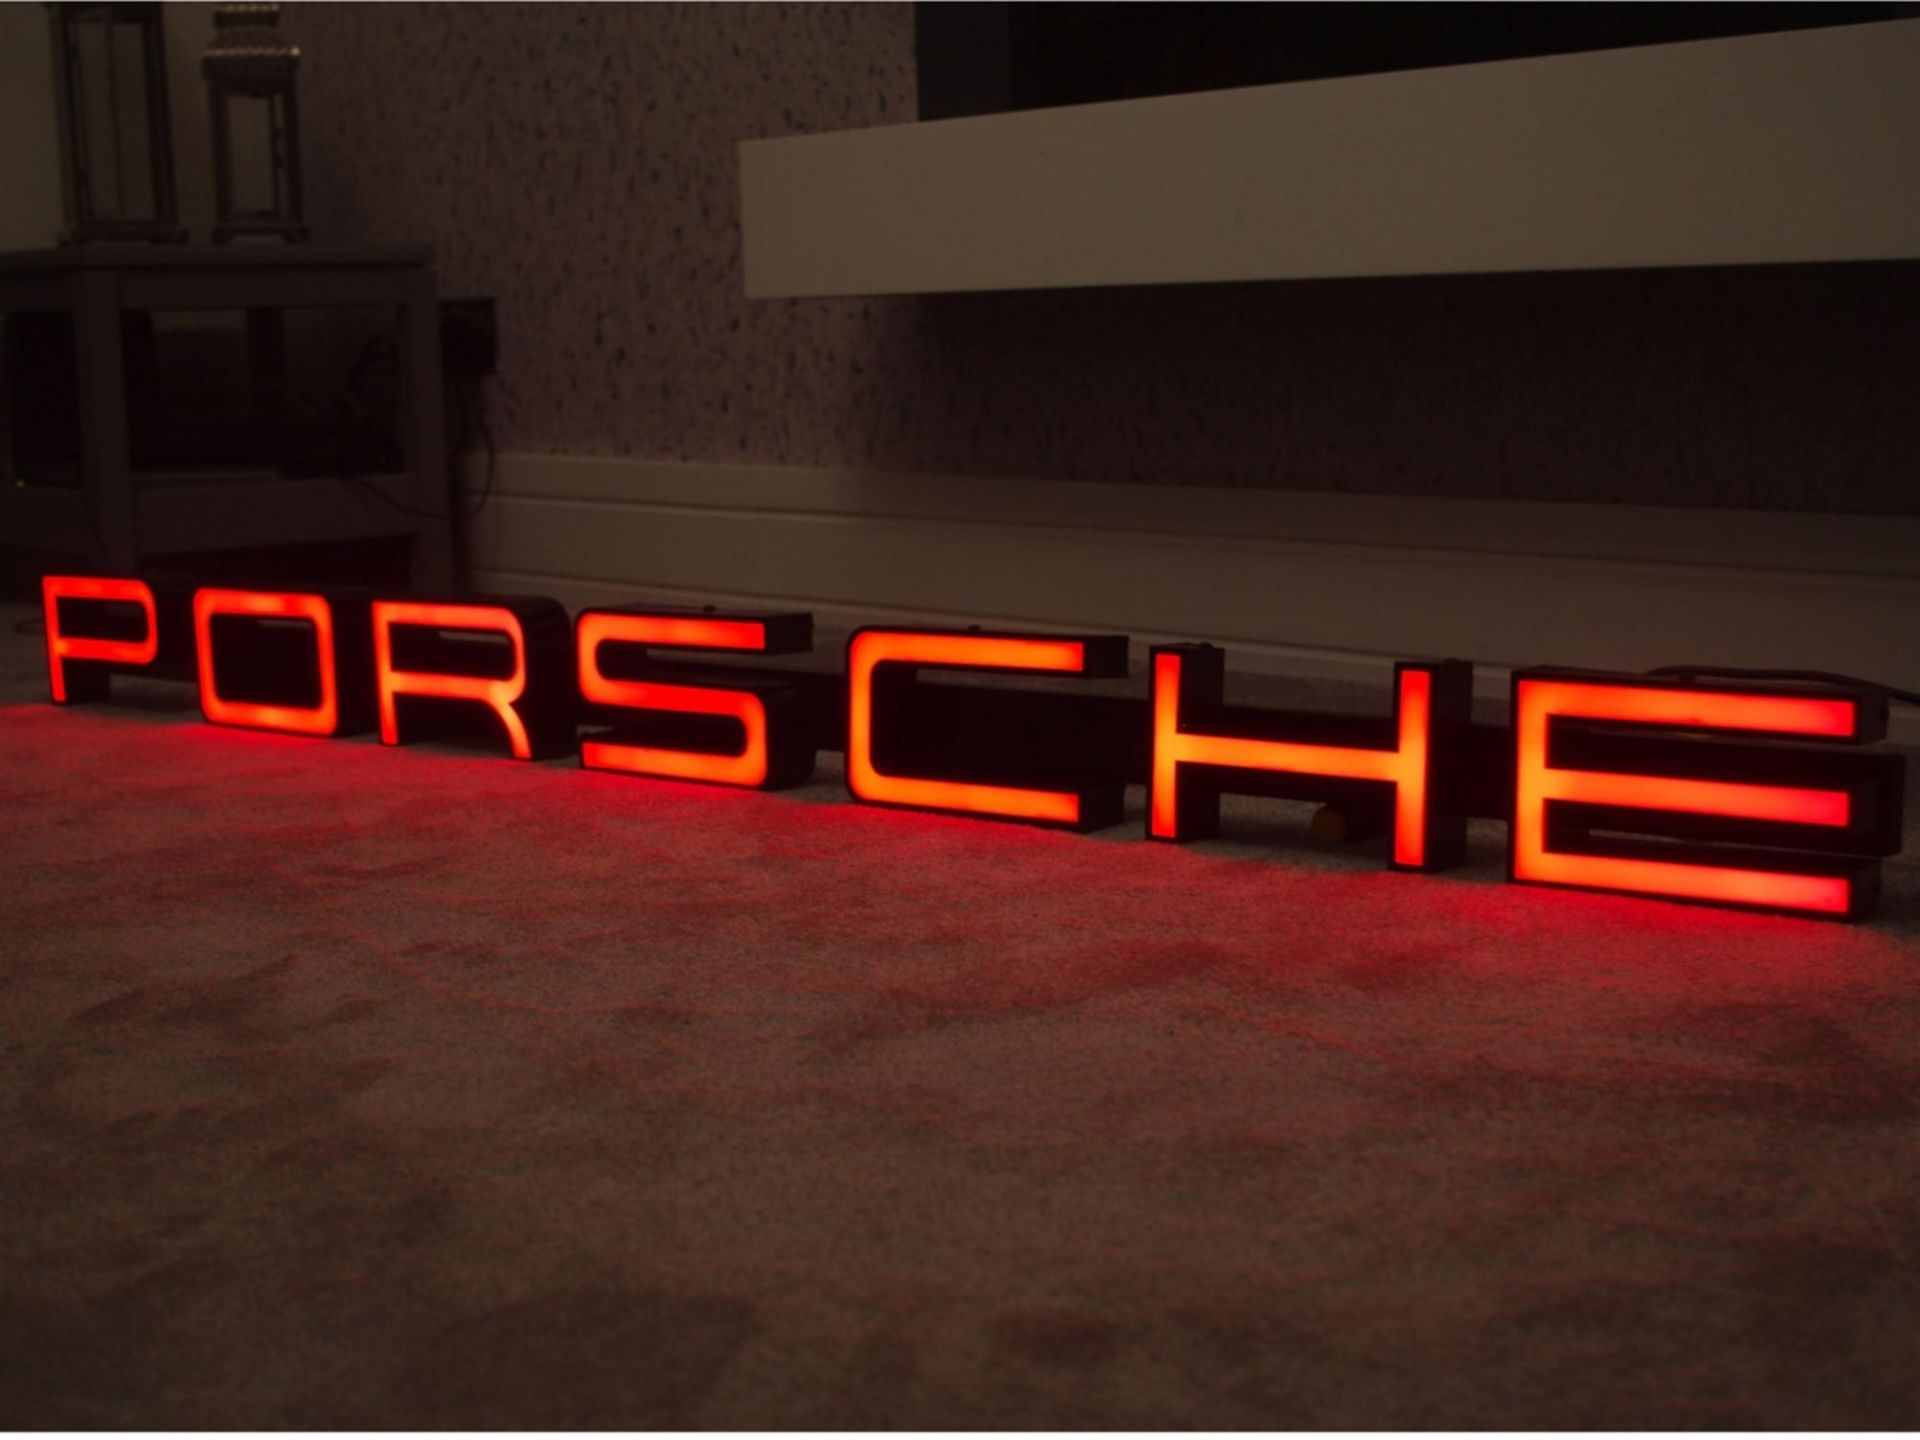 High-Quality Illuminated Porsche Sign Utilising a Powder-Coated Steel Frame